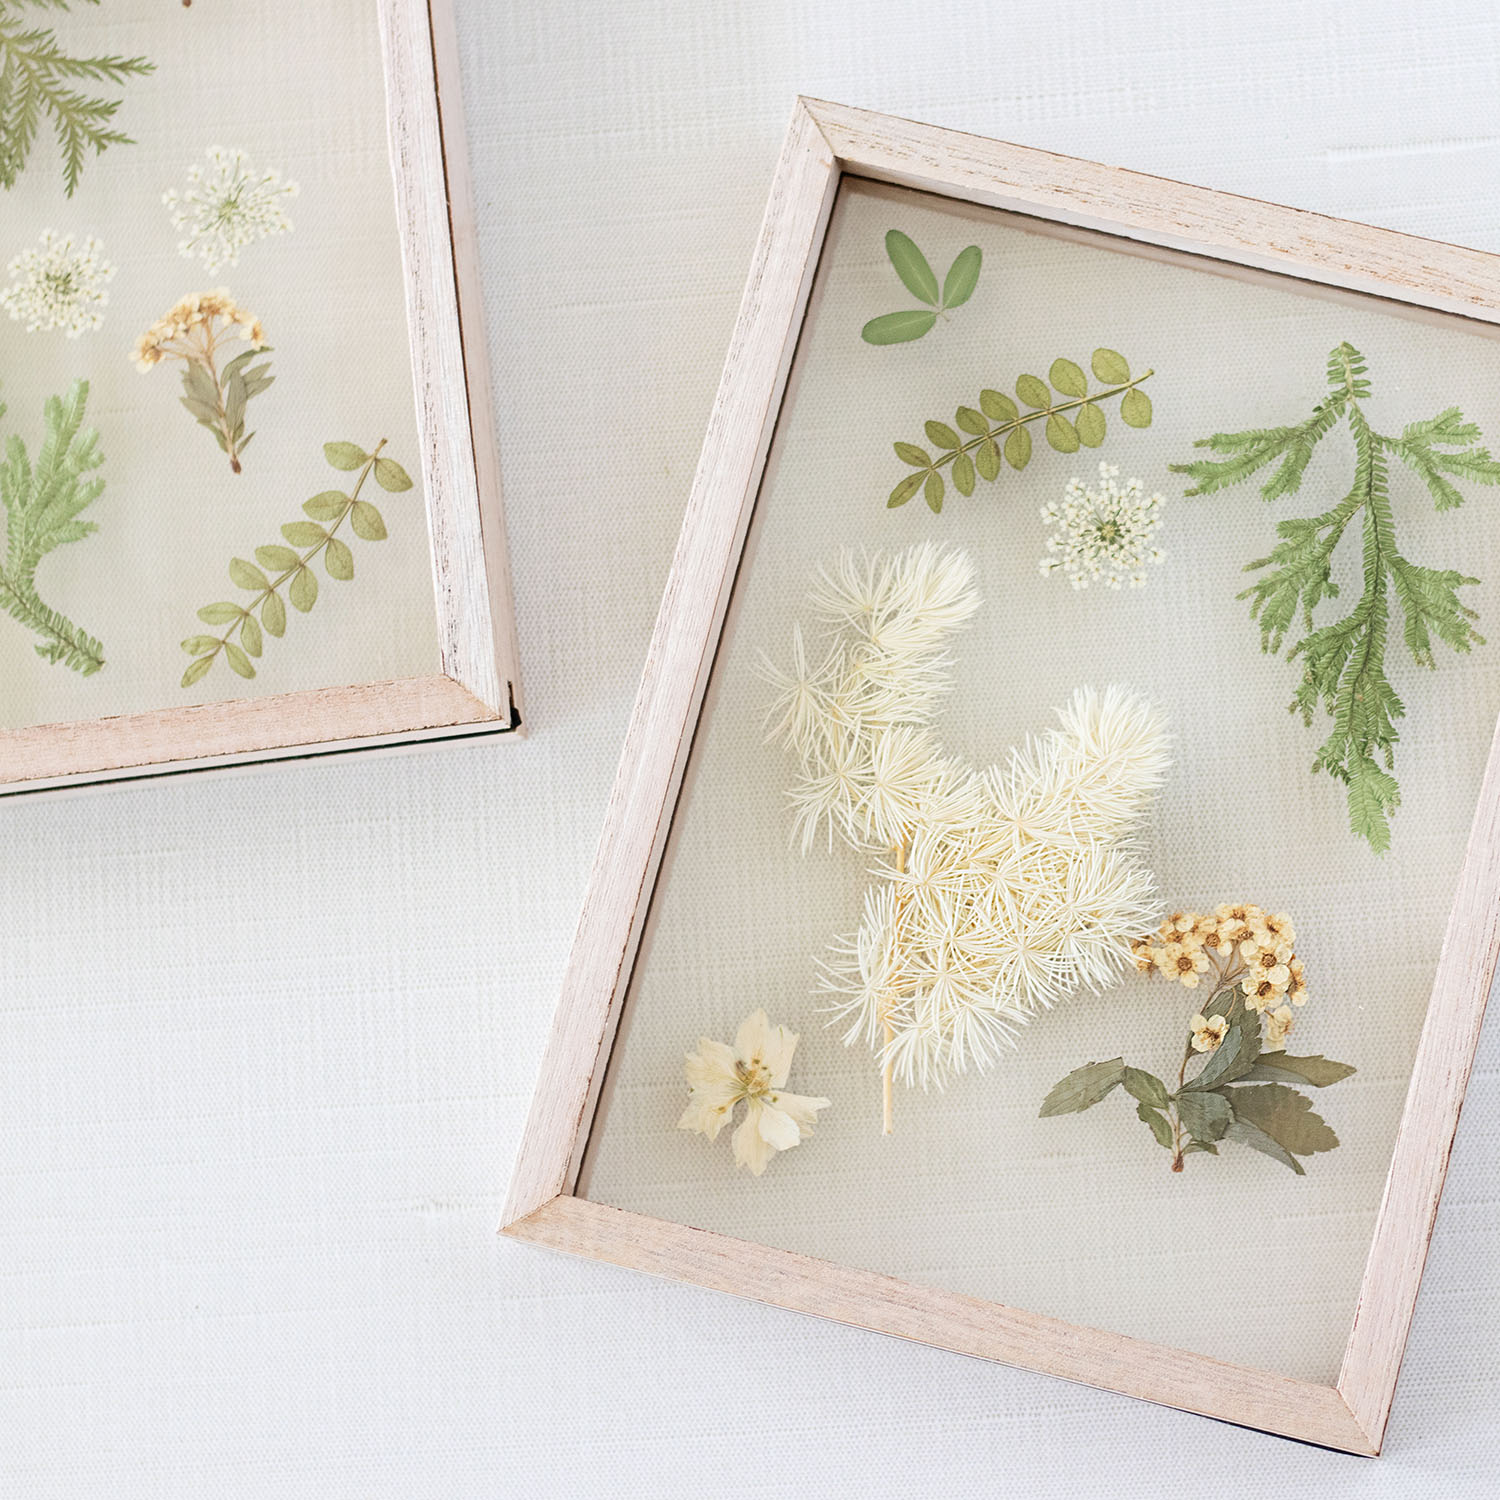 DIY Pressed Flower Art Frame